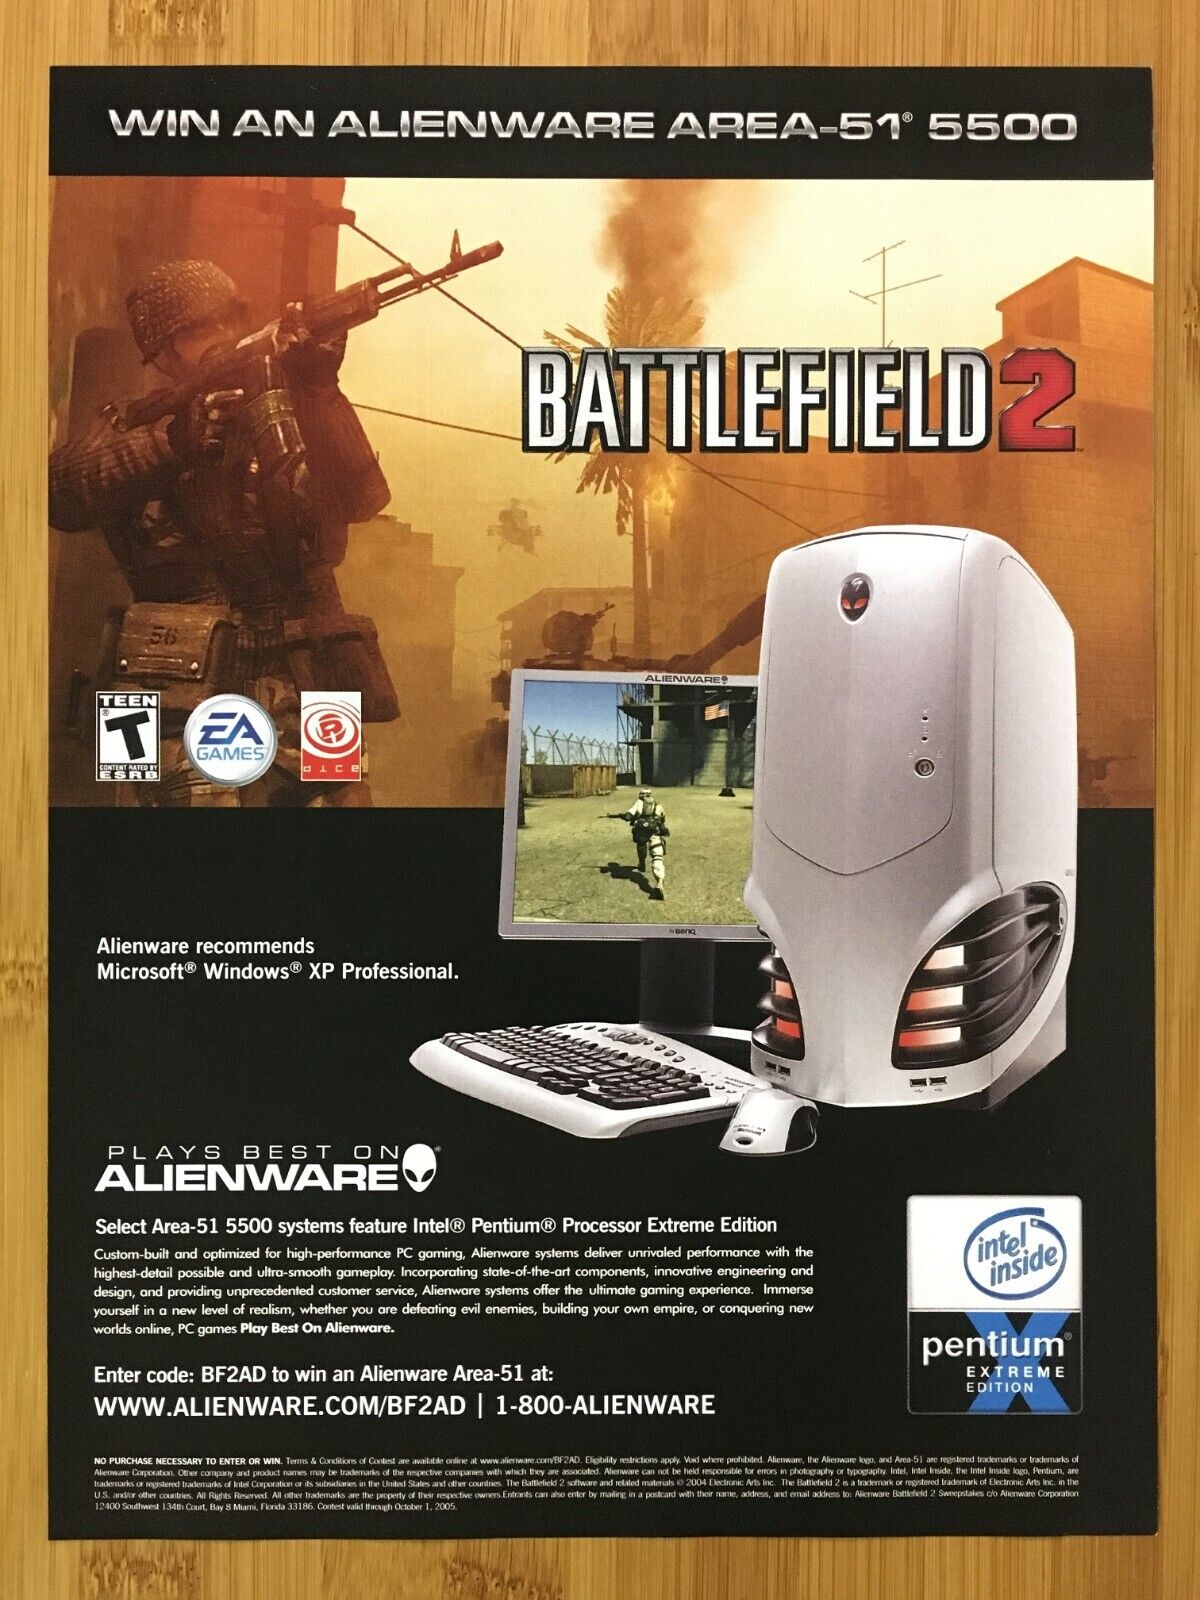 Battlefield 2 PC 2005 Print Ad/Poster Official Alienware Area 51 5500 Promo Art